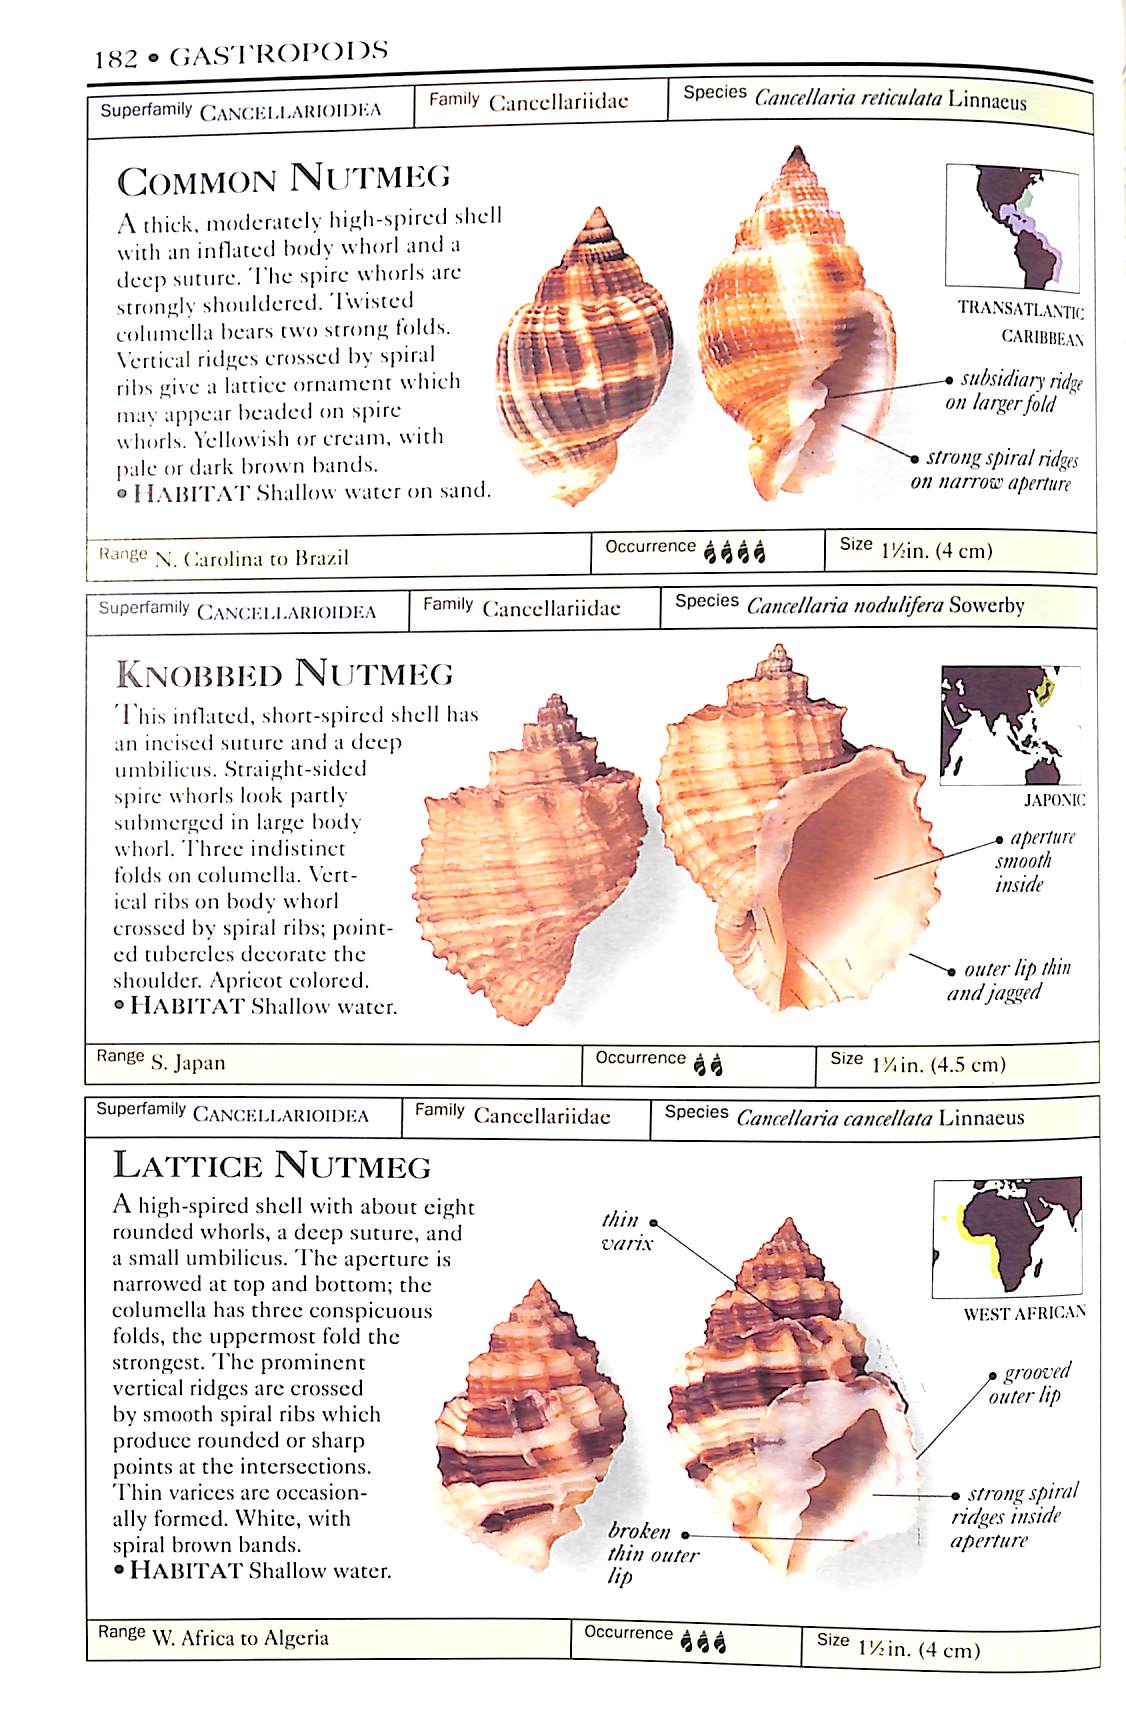 Seashells by MillhillClassifying Seashells